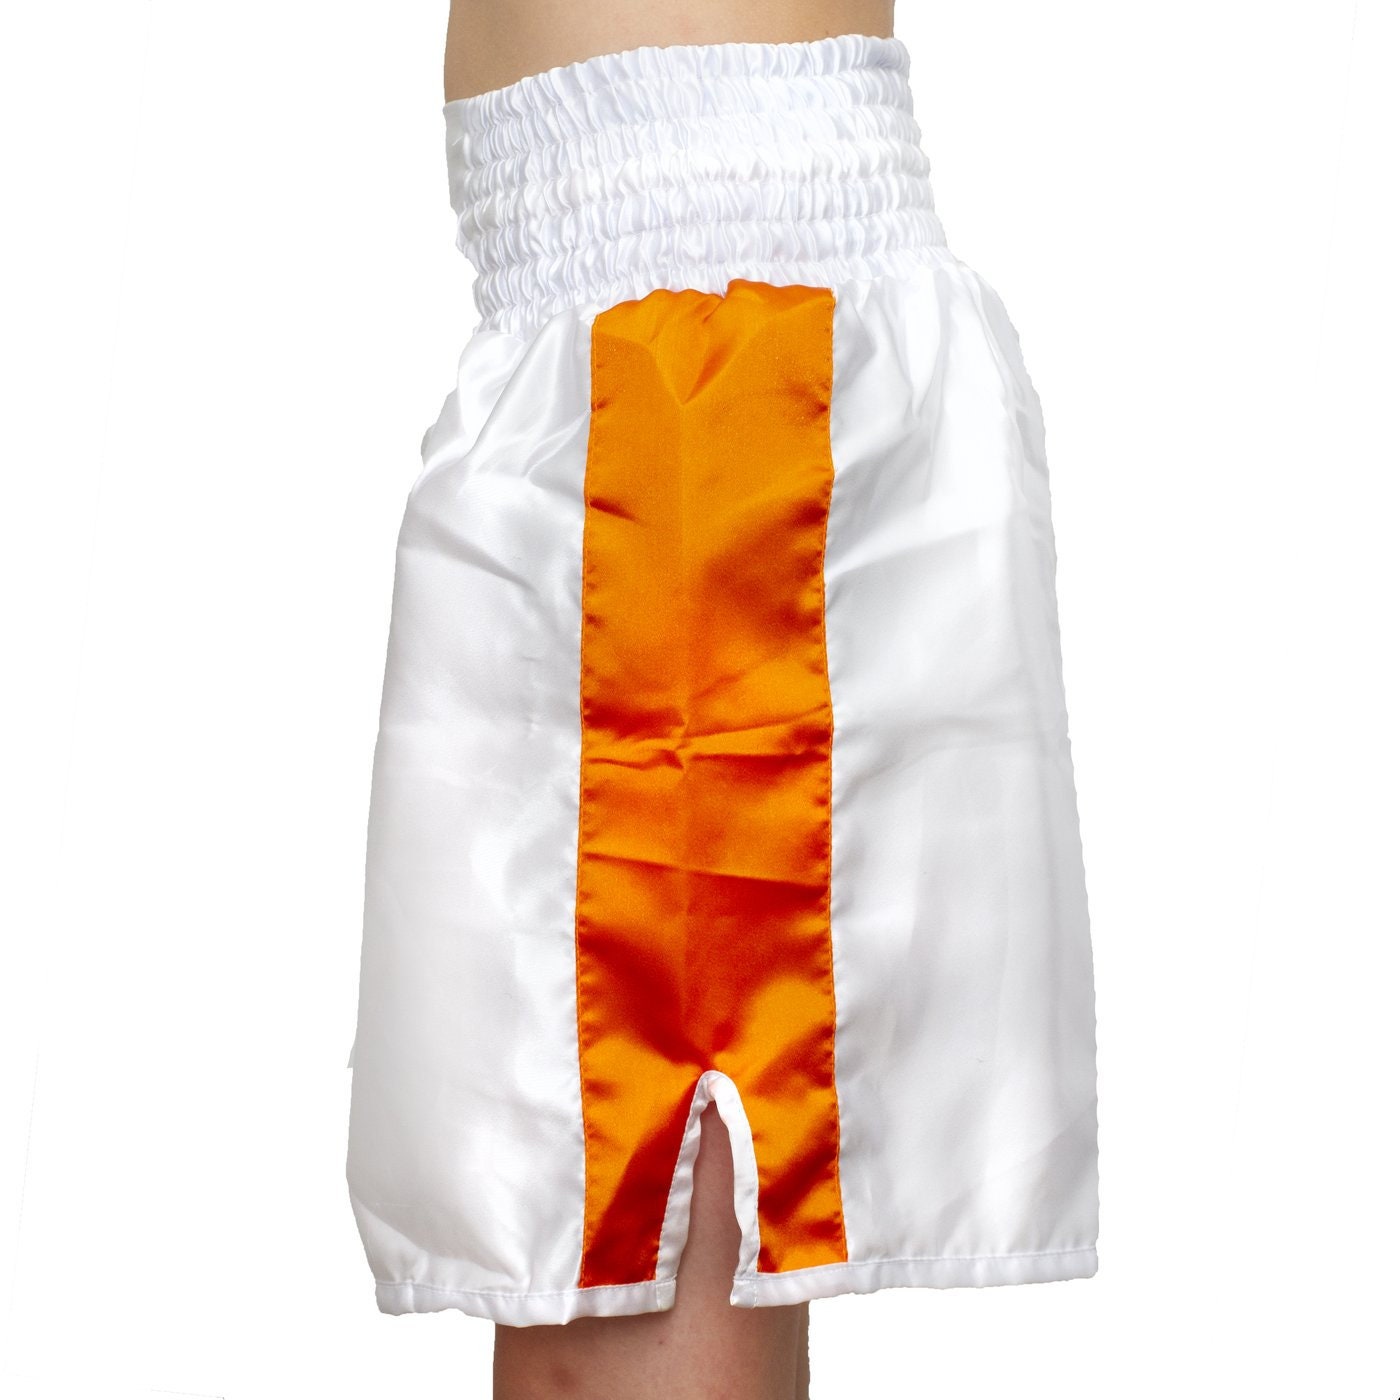 We Print Balls Personalised Union Jack Flag Boxing Shorts Kids Childrens 4-14 Years